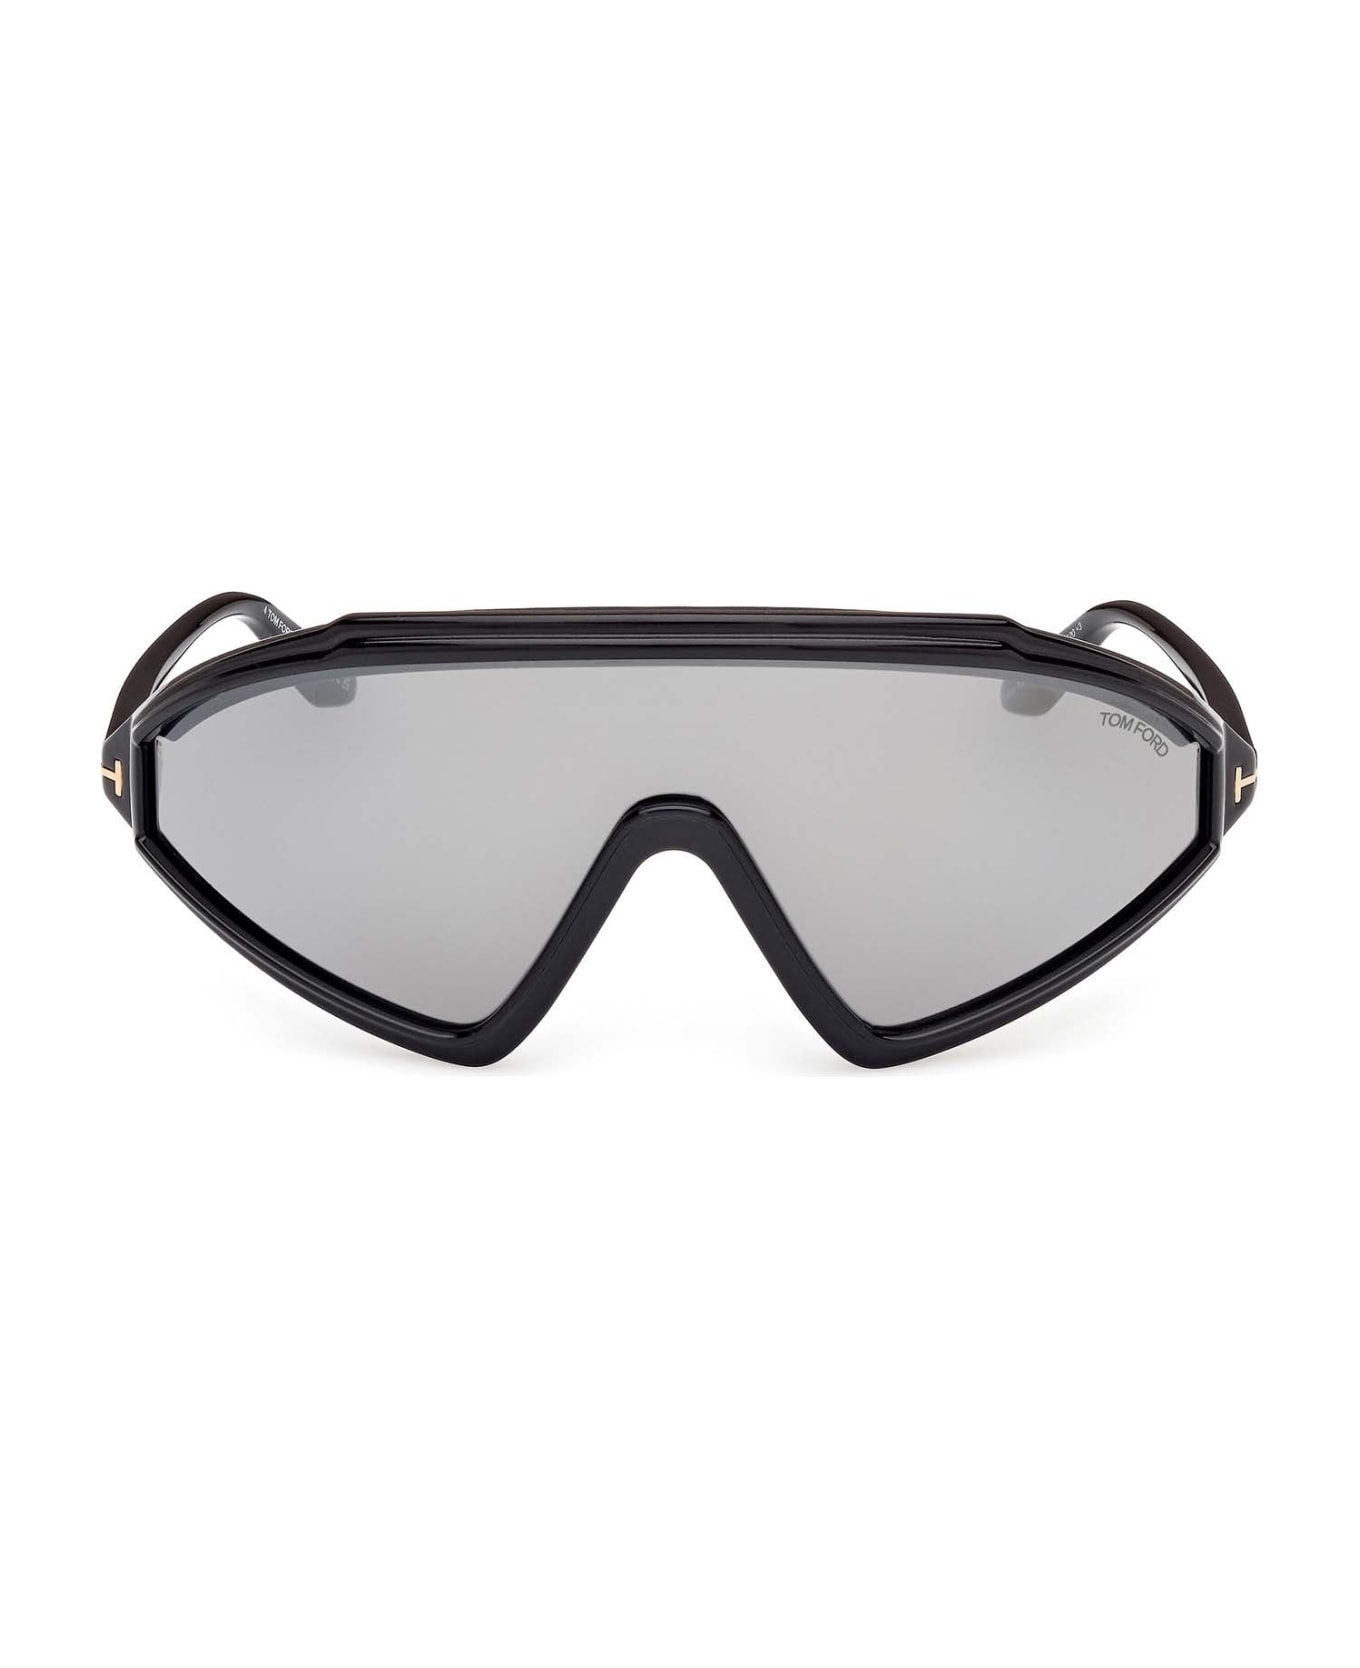 Tom Ford Eyewear Sunglasses - Nero/Silver